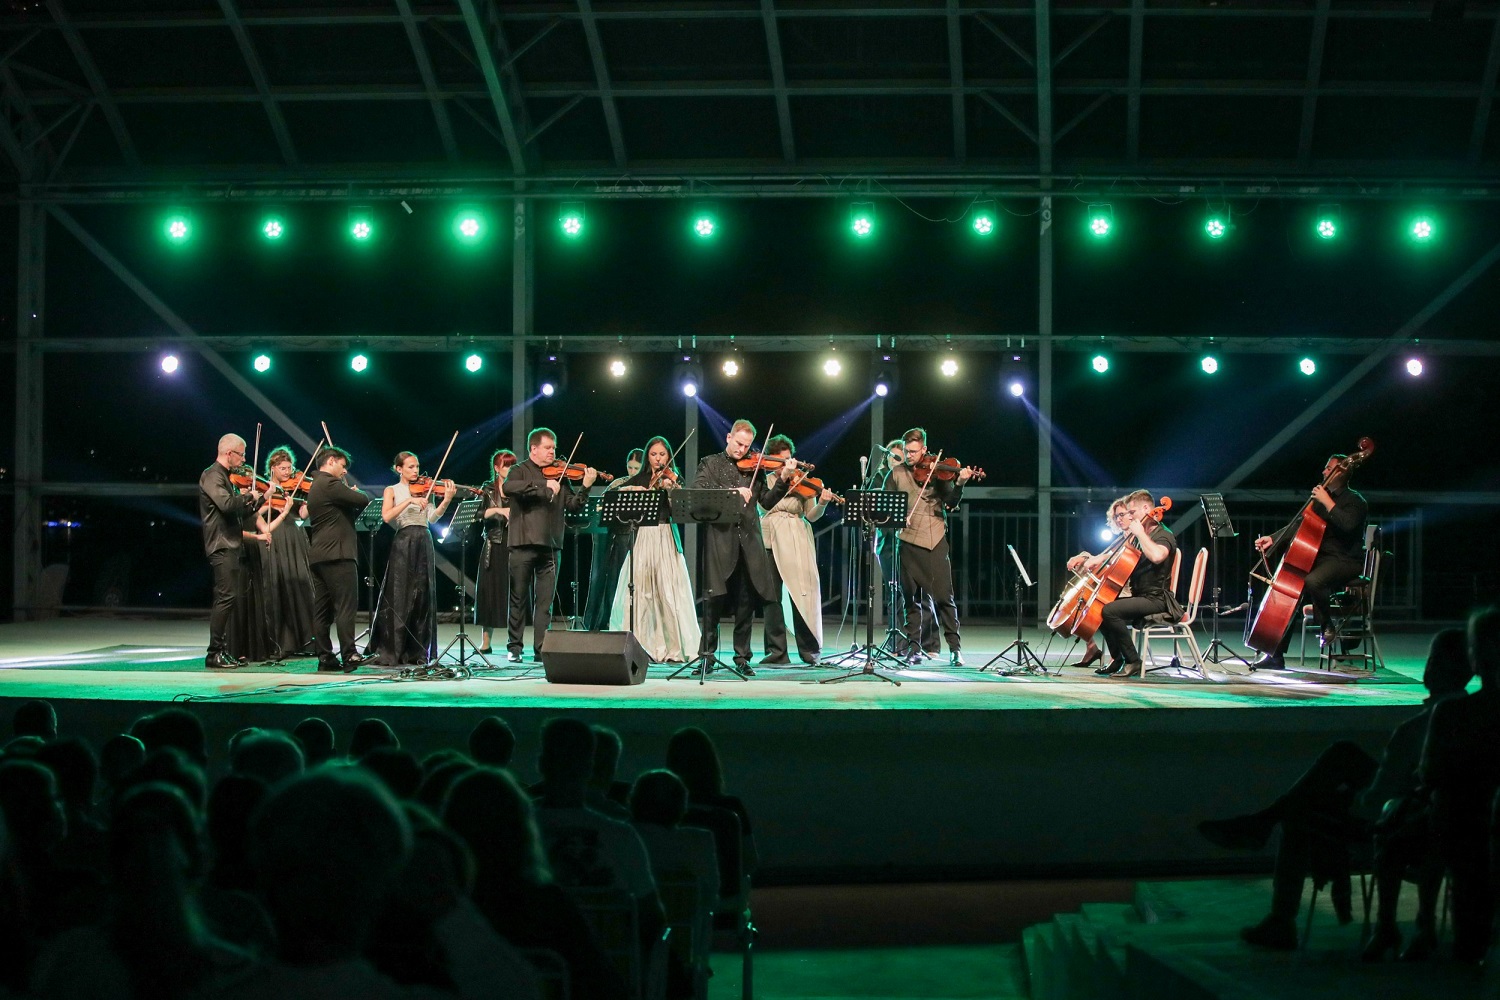 Serbian evening at Ohrid Summer Festival – topmost aesthetic enjoyment with the virtuoso Milenkovikj and chamber orchestra “Camerata Novi Sad”